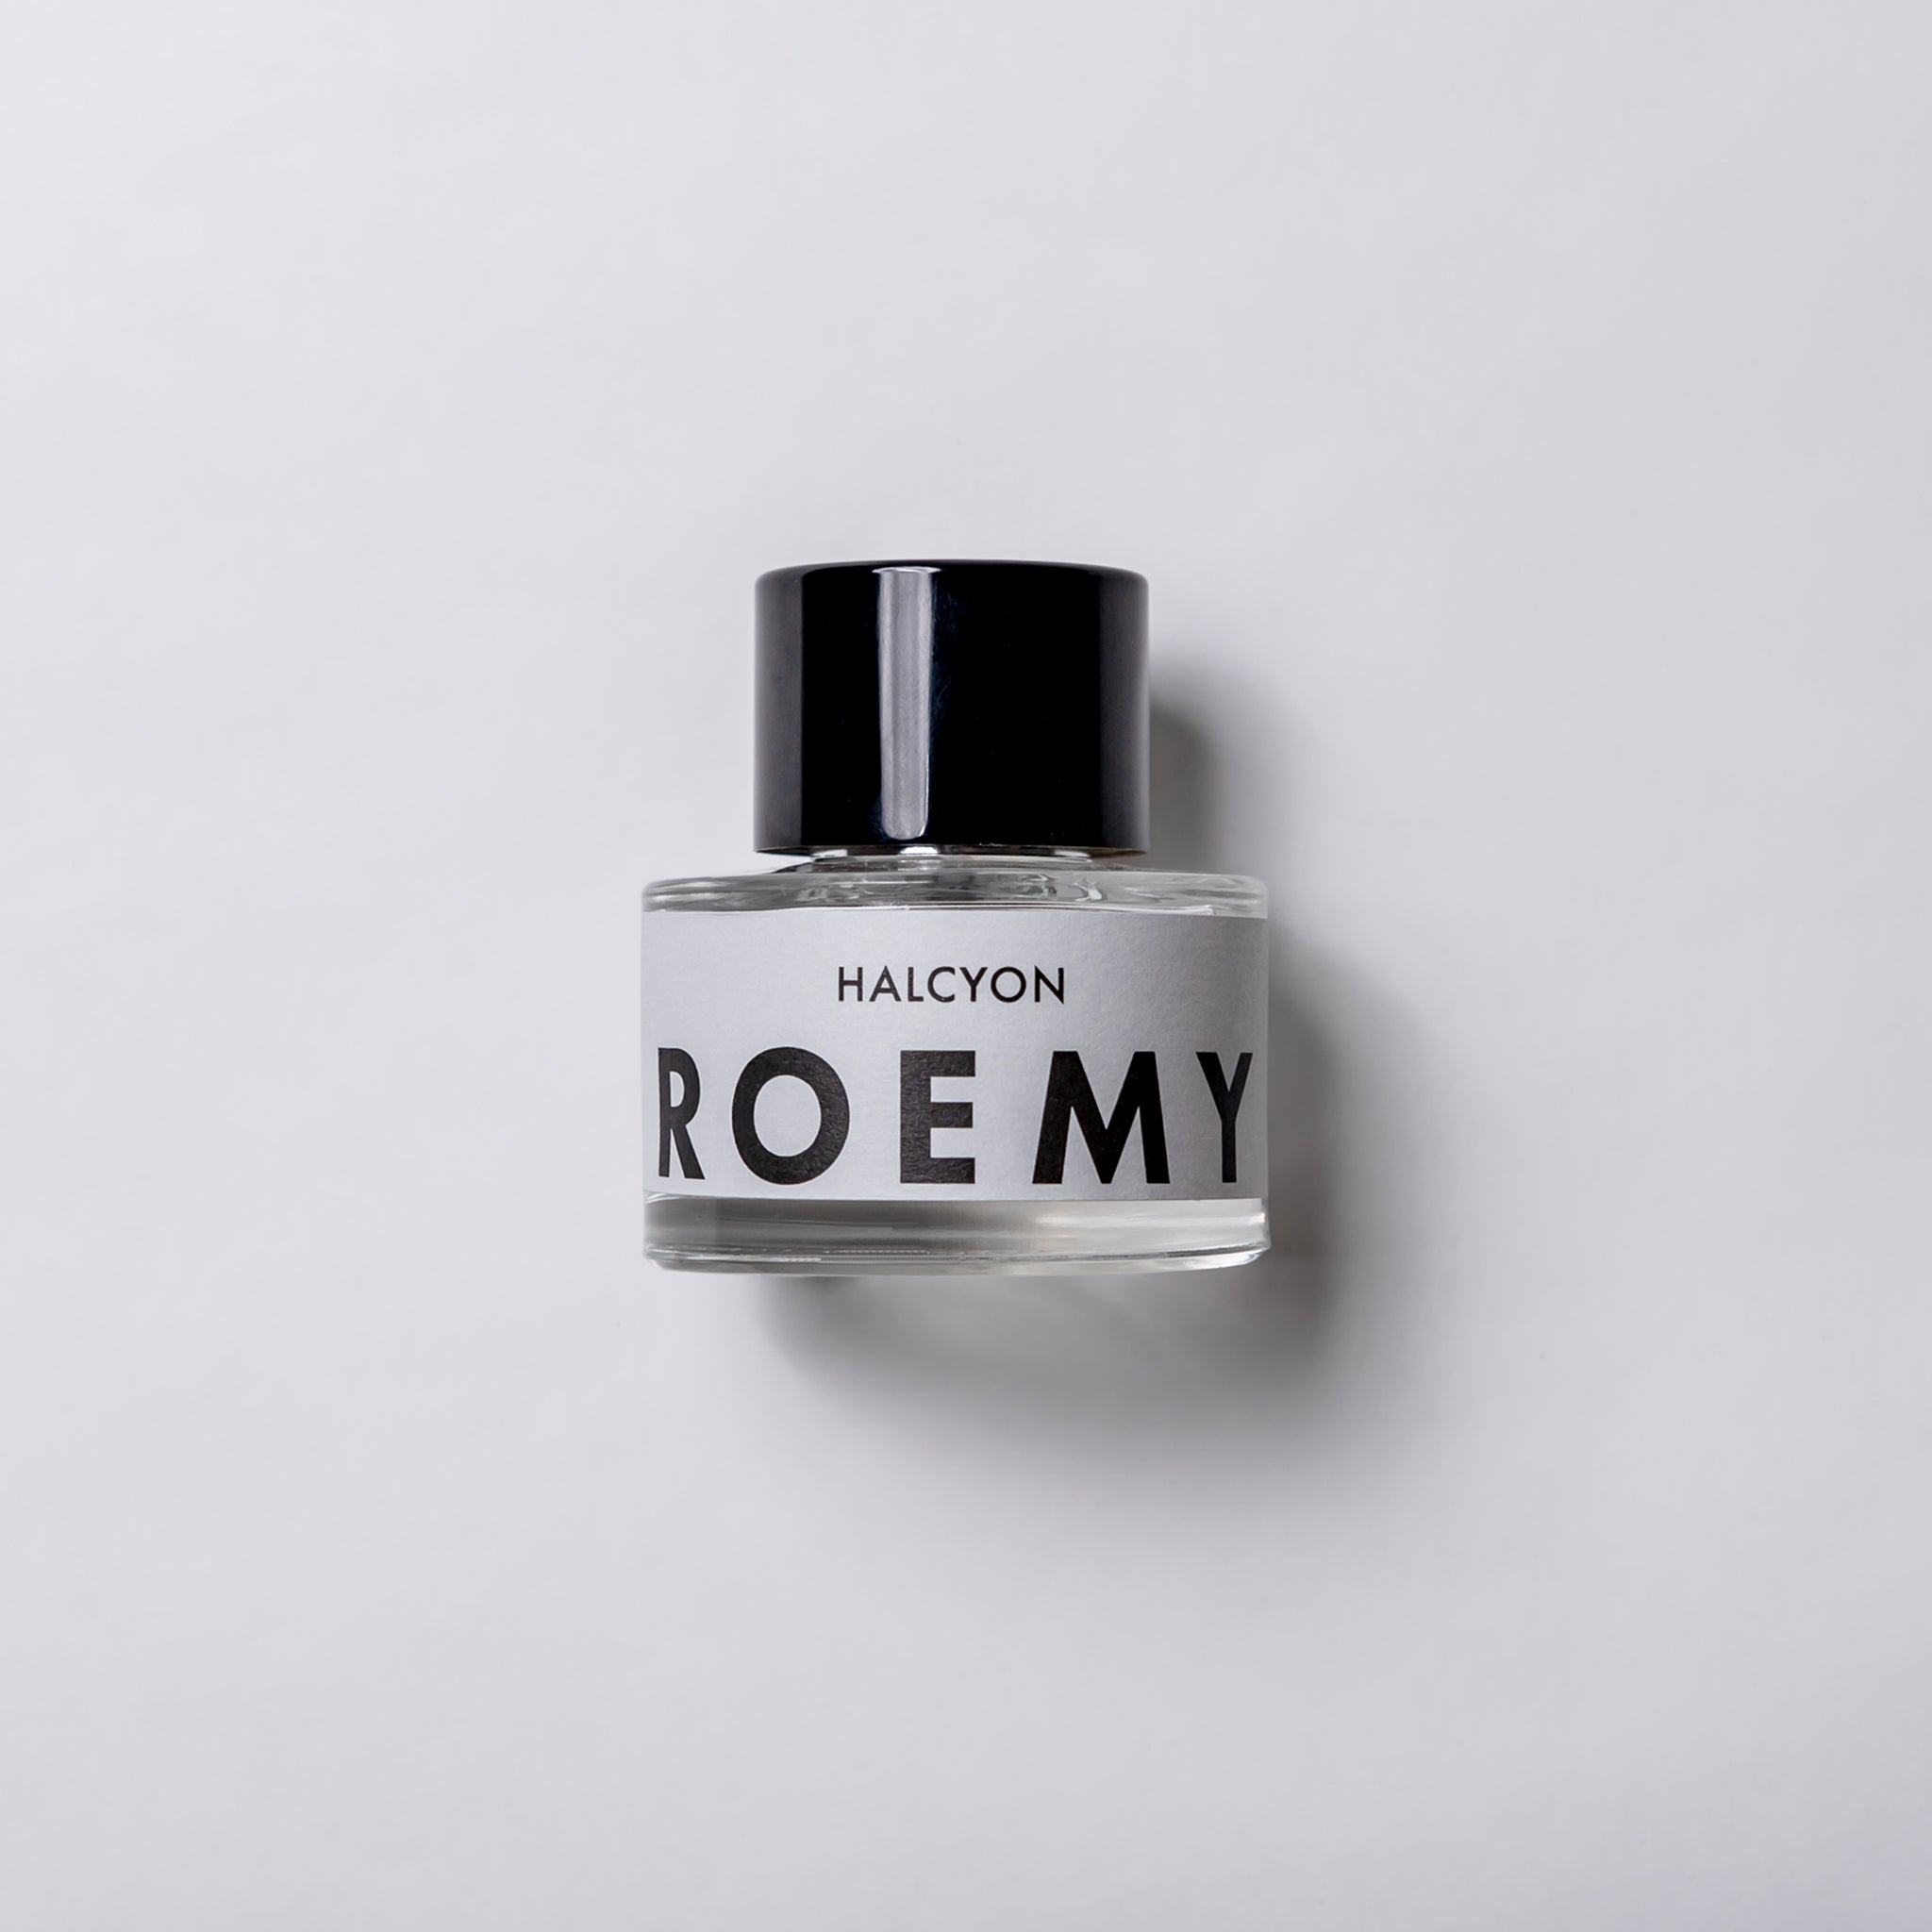 ROEMY Halcyon 55mL Parfum - top down